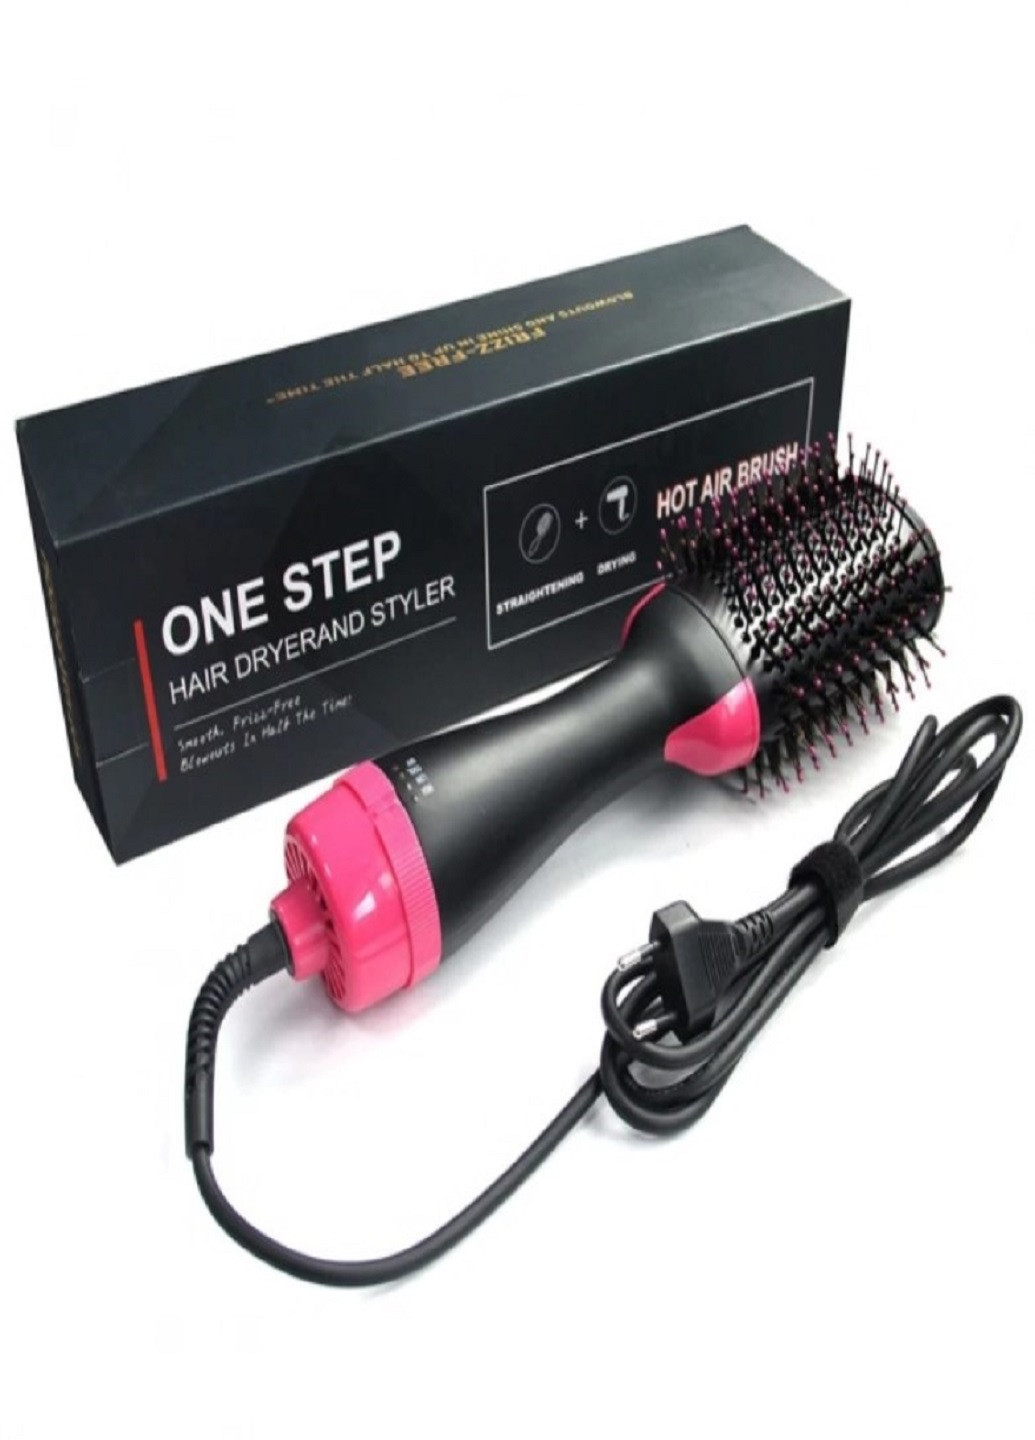 Фен щетка One Step Hair Dryer and Styler стайлер 3 в 1 для укладки волос VTech (259504008)